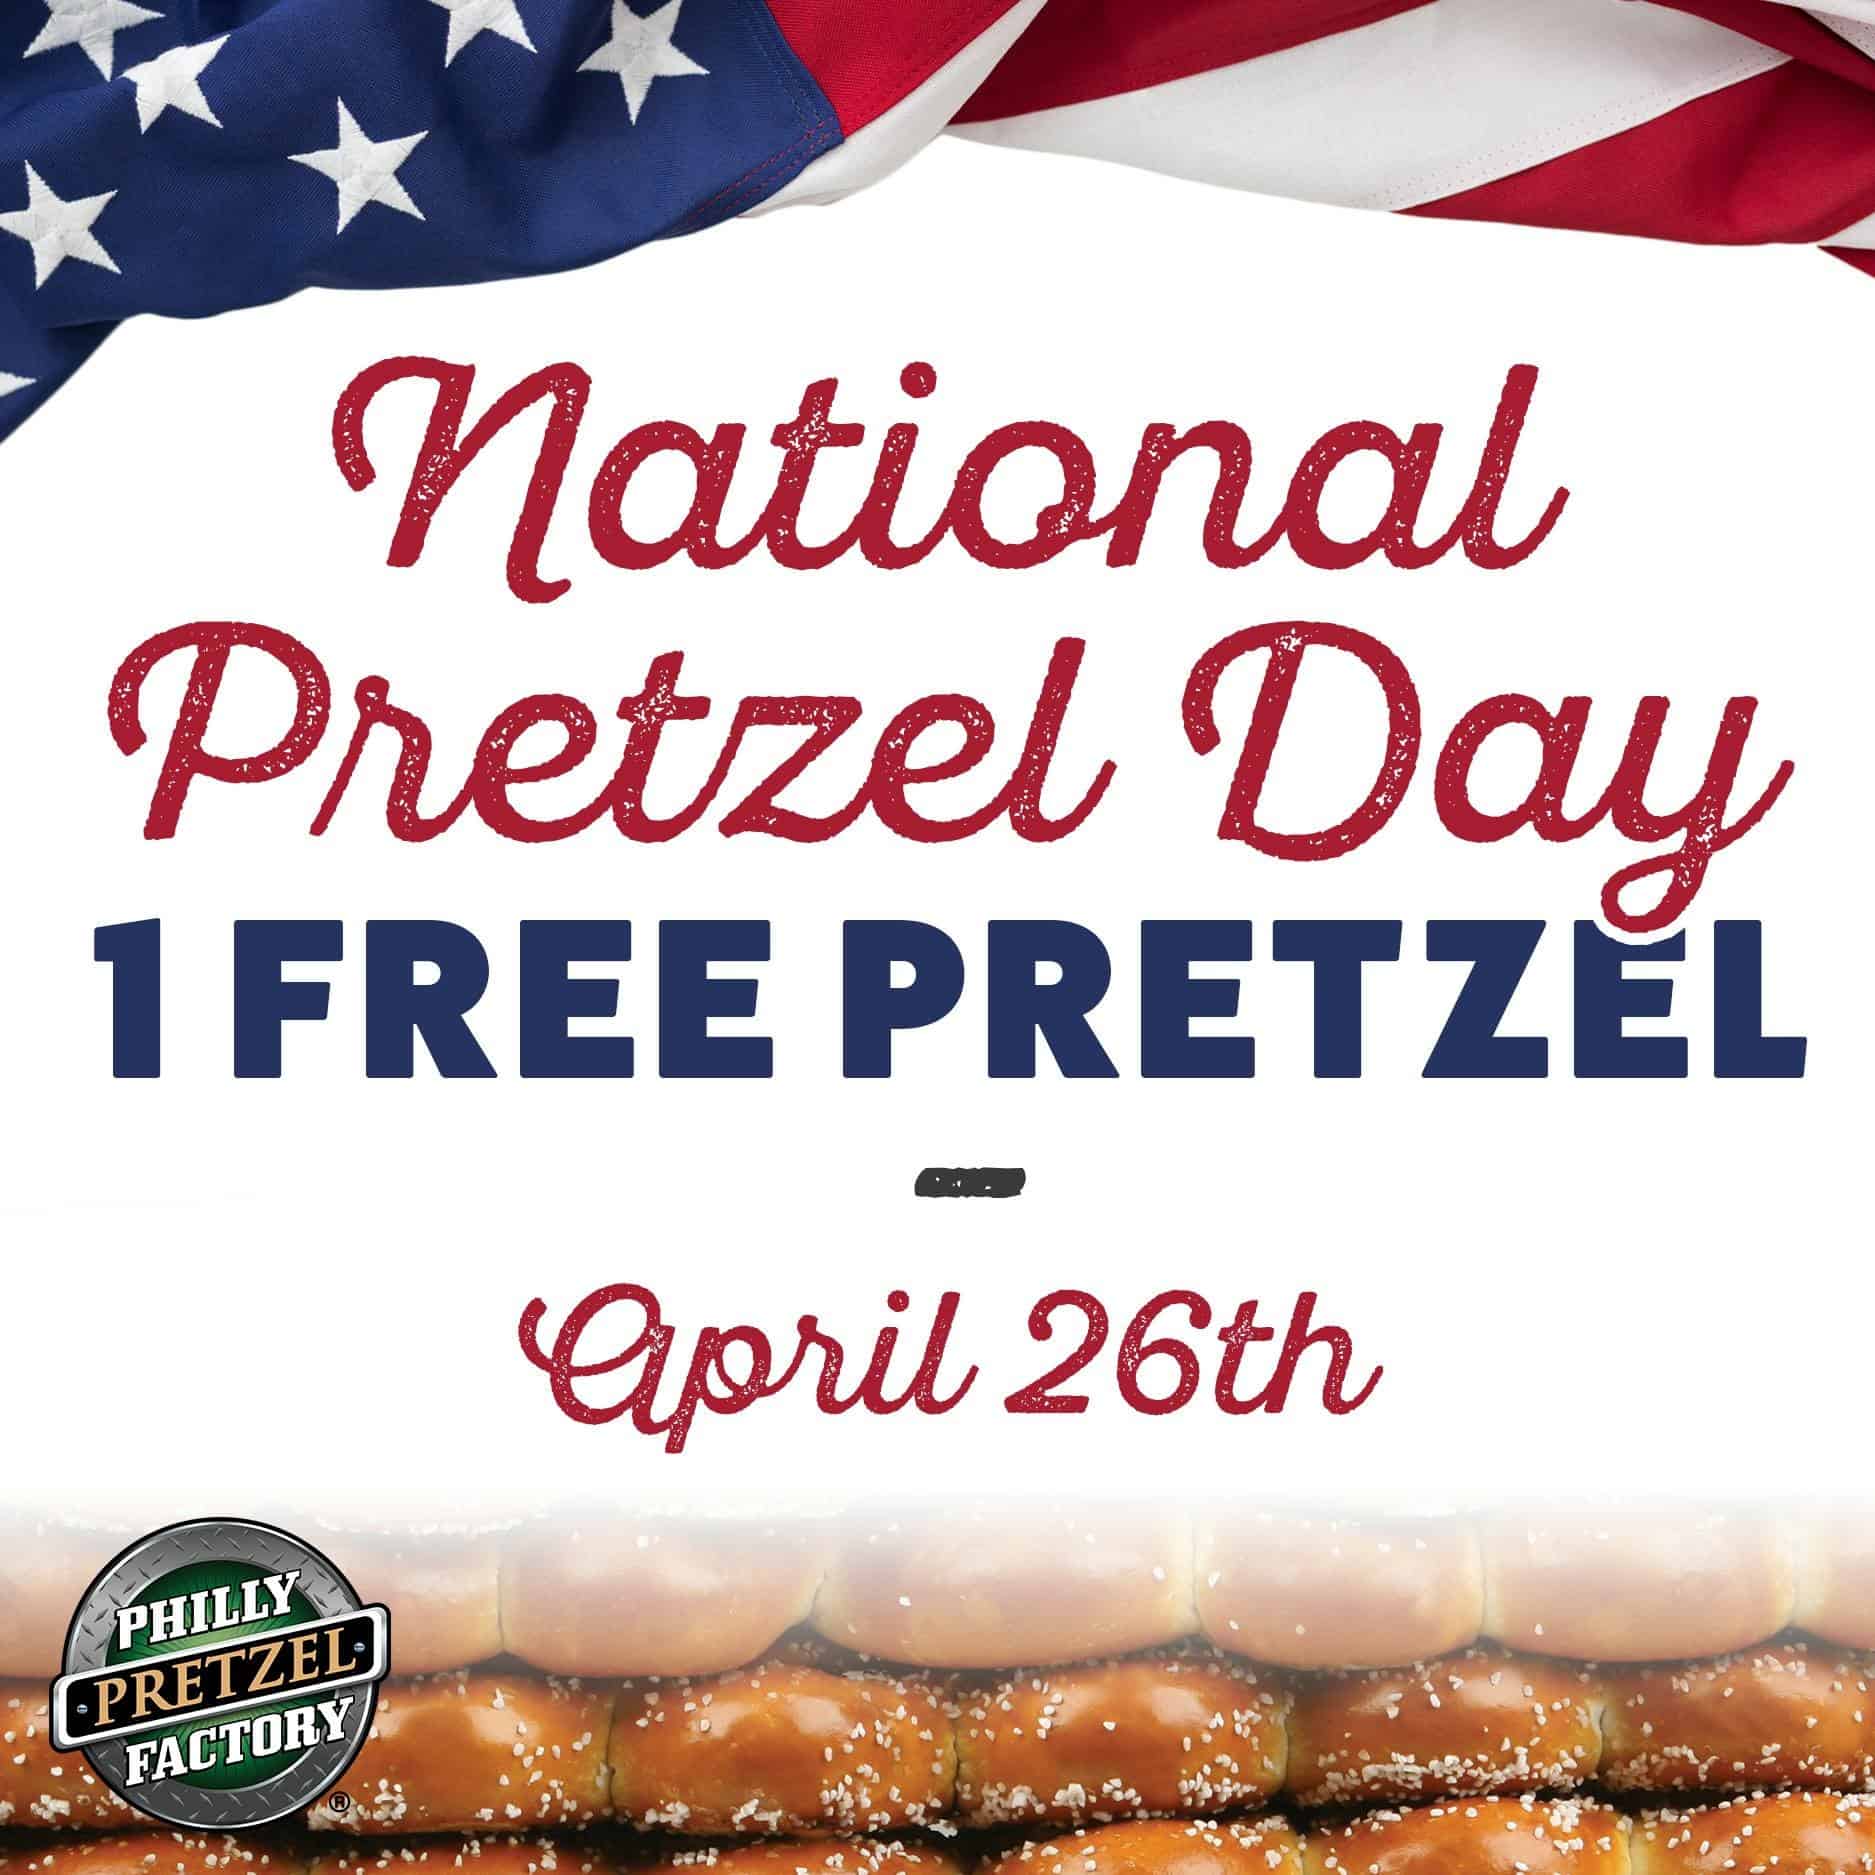 FREE Pretzel At Philly Pretzel Factory 4/26!